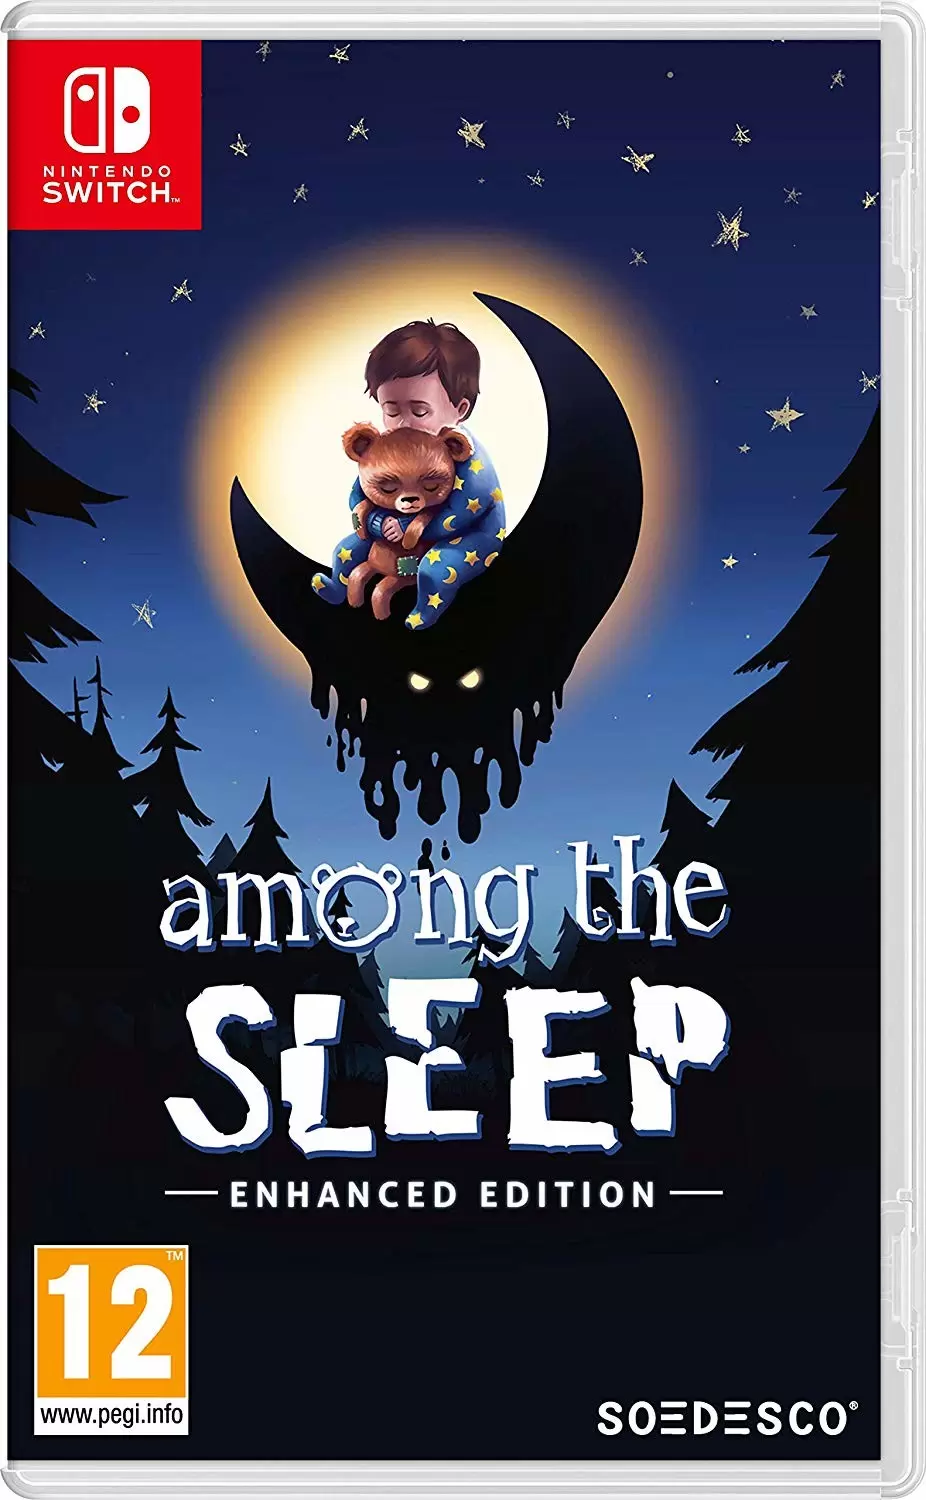 Nintendo Switch Games - Among The Sleep - Enhanced Edition